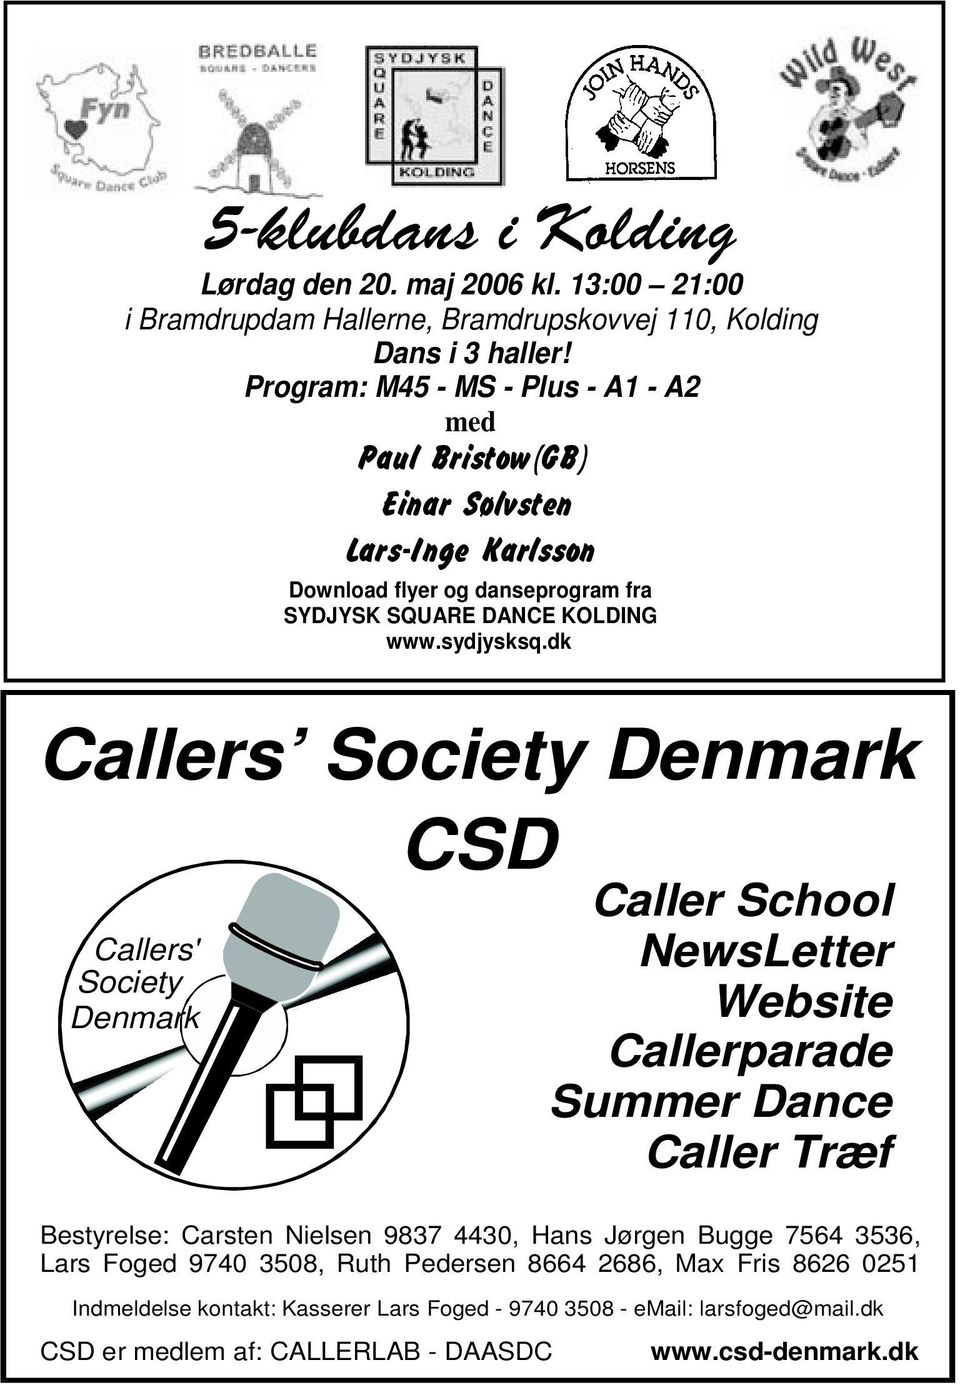 dk Callers Society Denmark CSD CSD er medlem af: CALLERLAB - DAASDC Caller School NewsLetter Website Callerparade Summer Dance Caller Træf Bestyrelse: